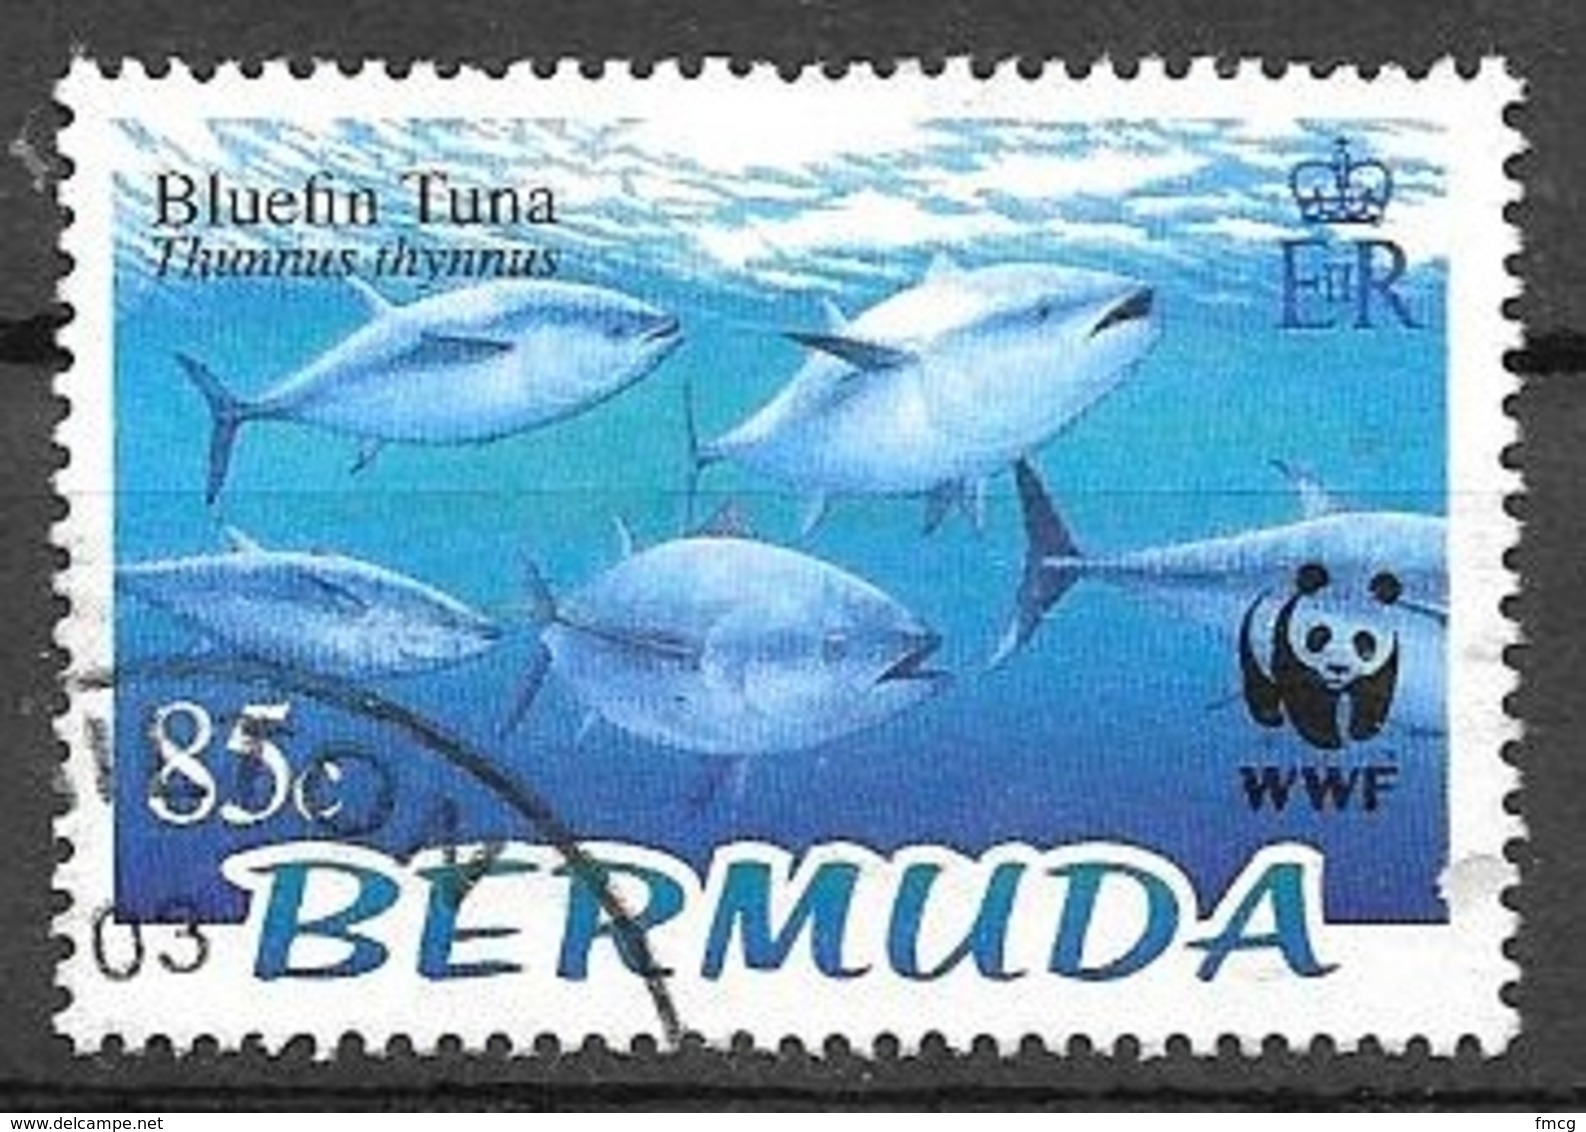 2004 85 Cents WWF Bluefish Tuna, Used - Bermuda